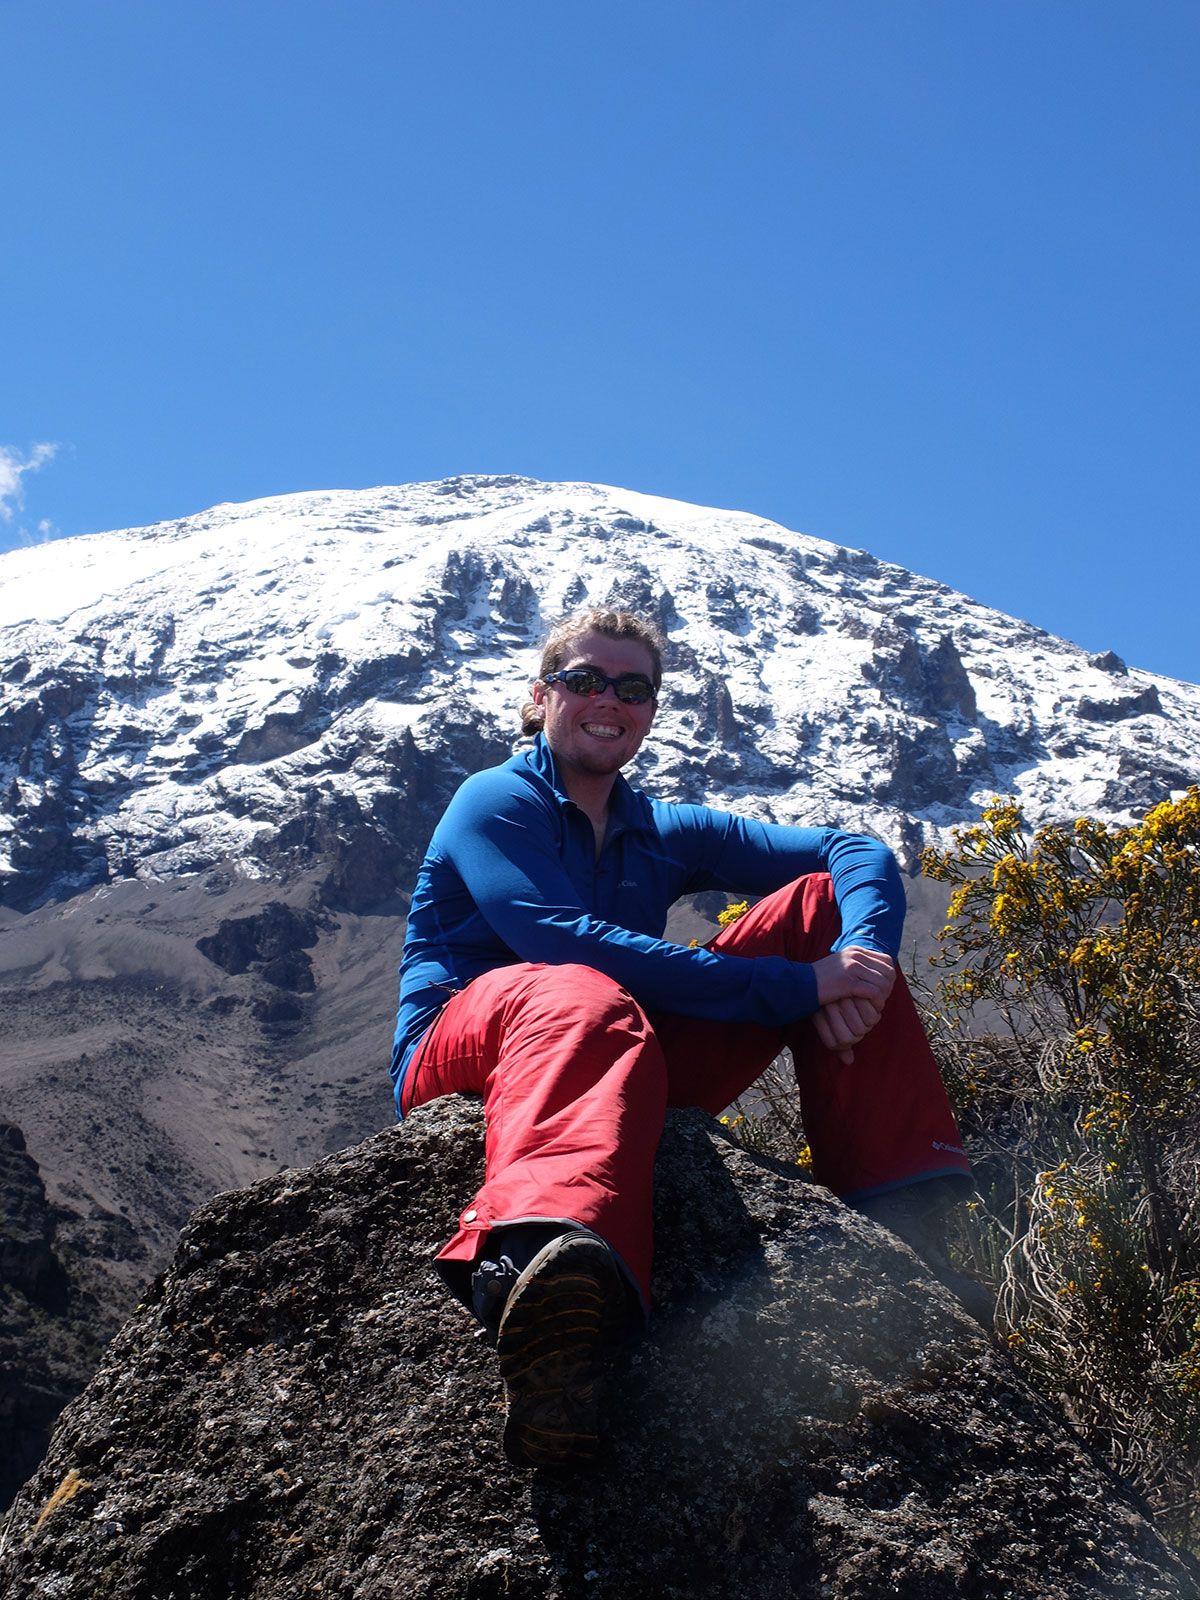 Mount Kilimanjaro and website testing